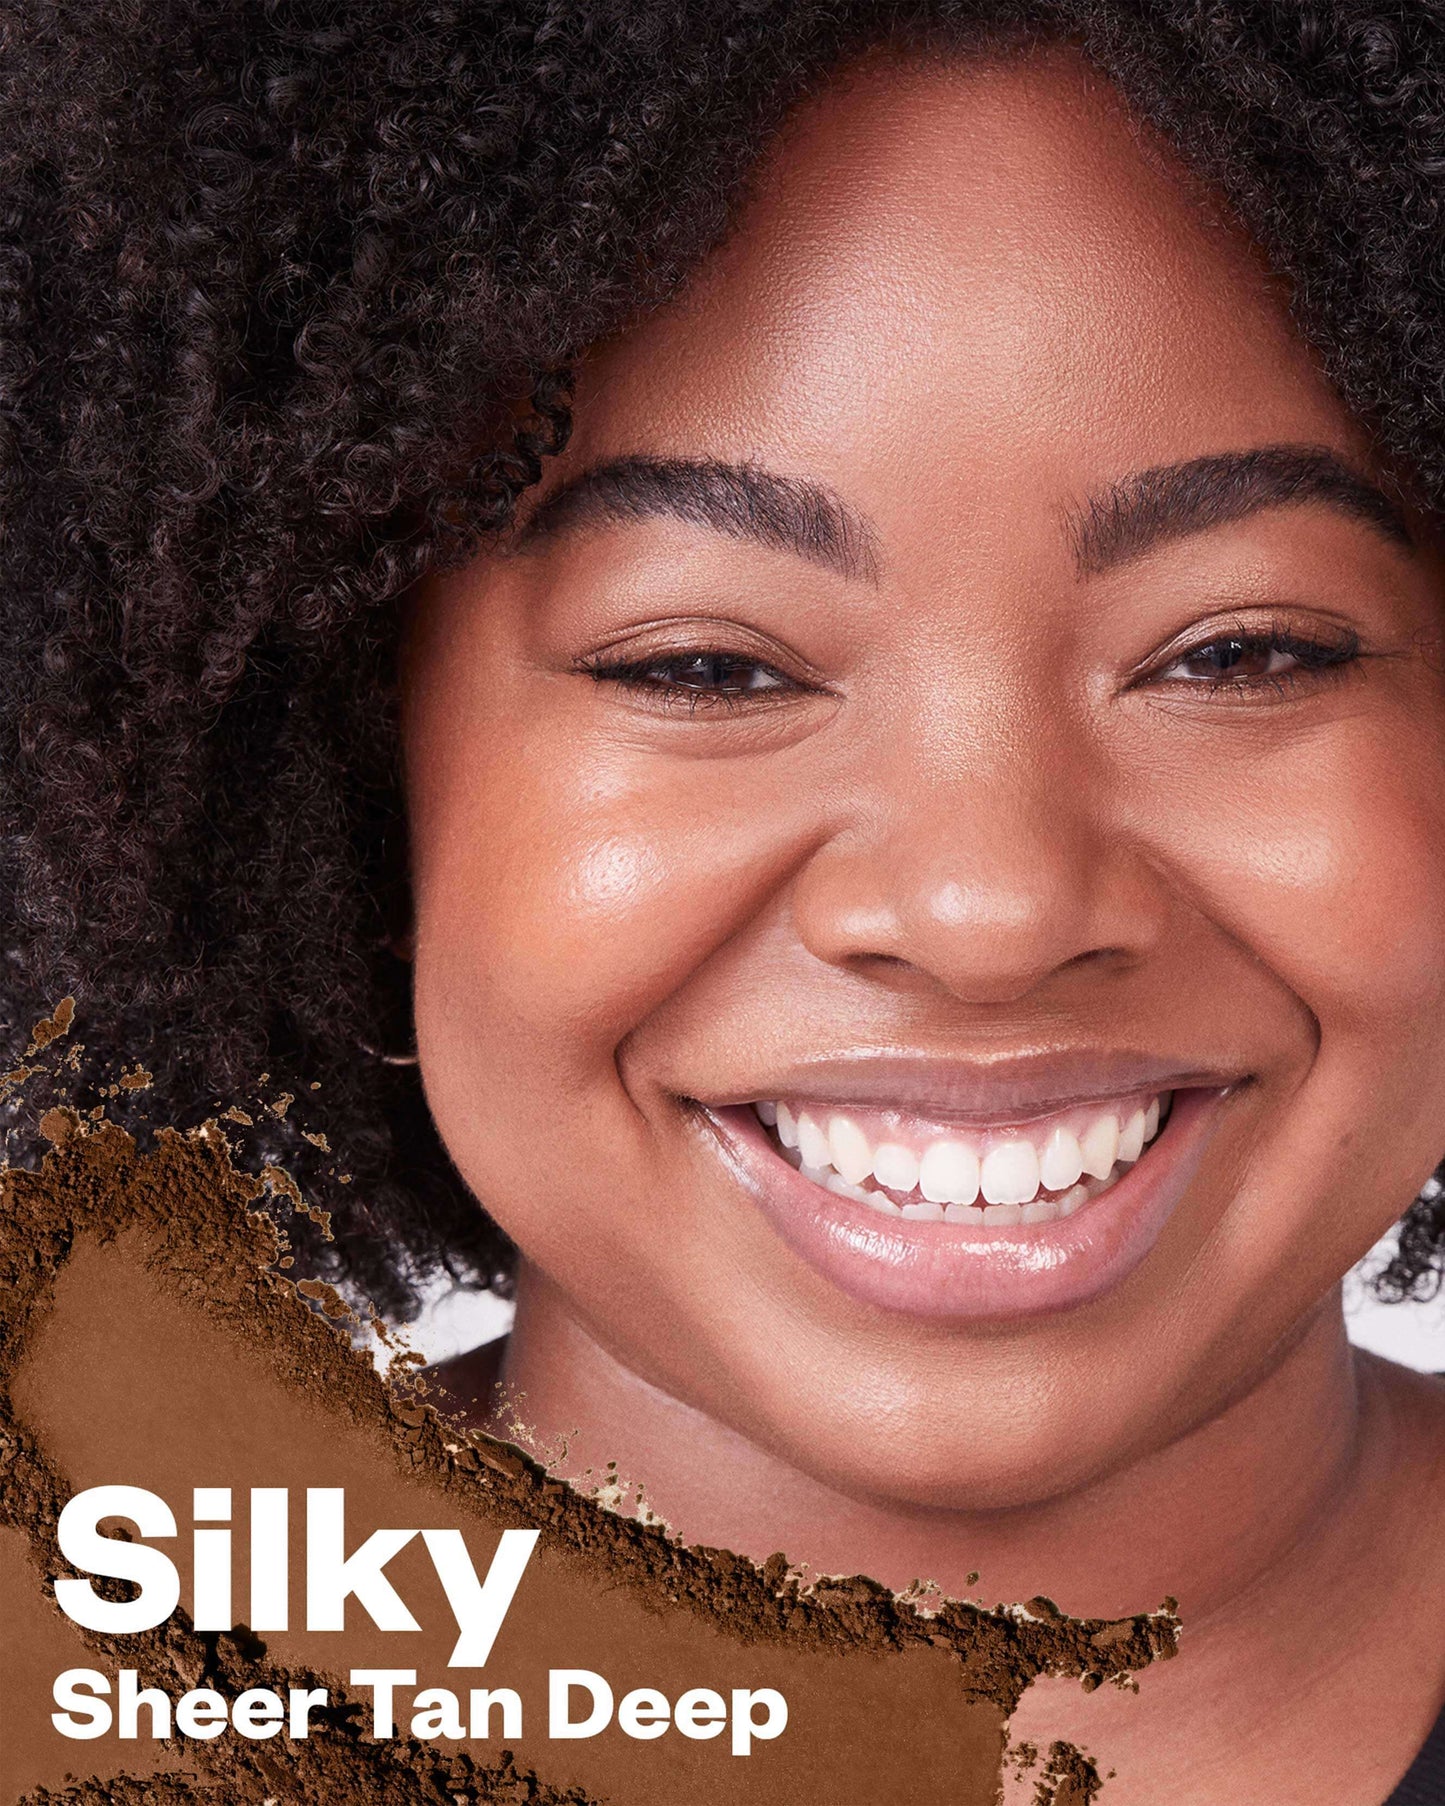 Silky (sheer tan deep)